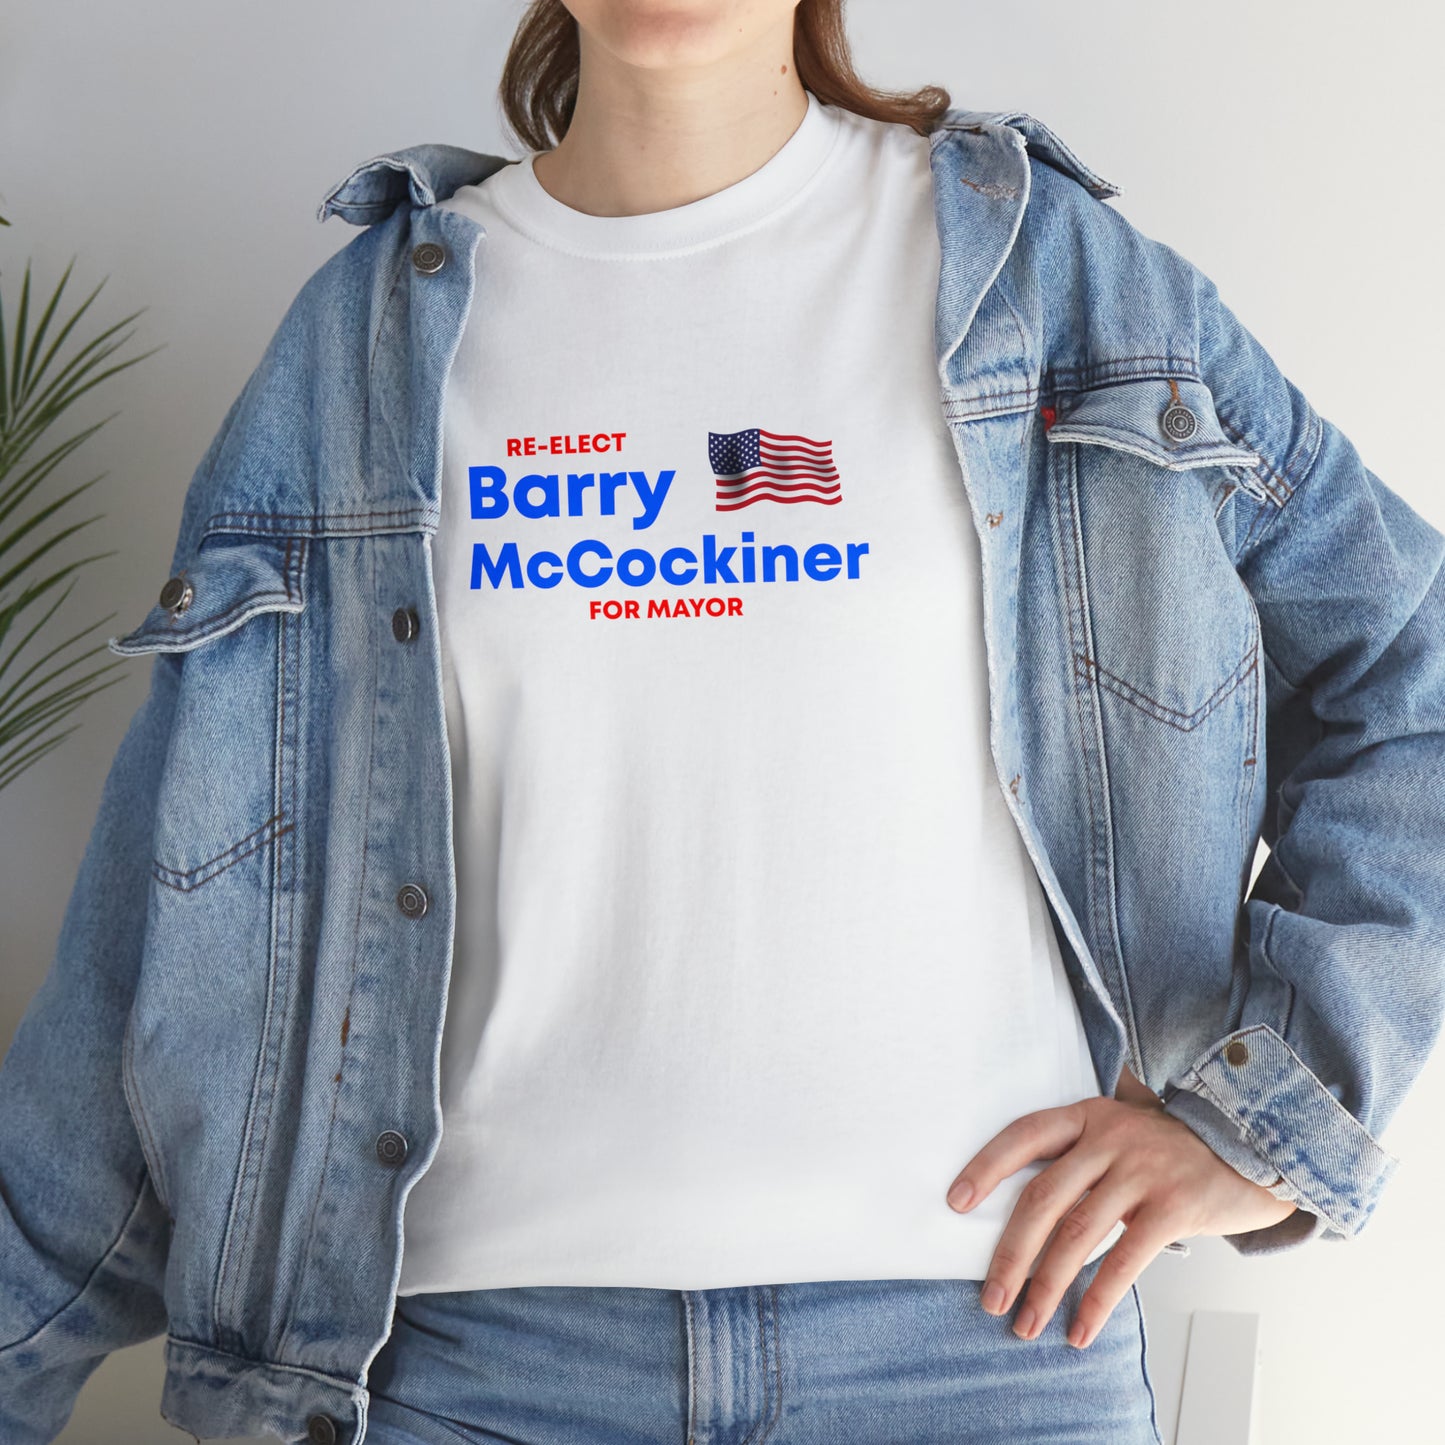 BARRY McCOCKINER T-SHIRT